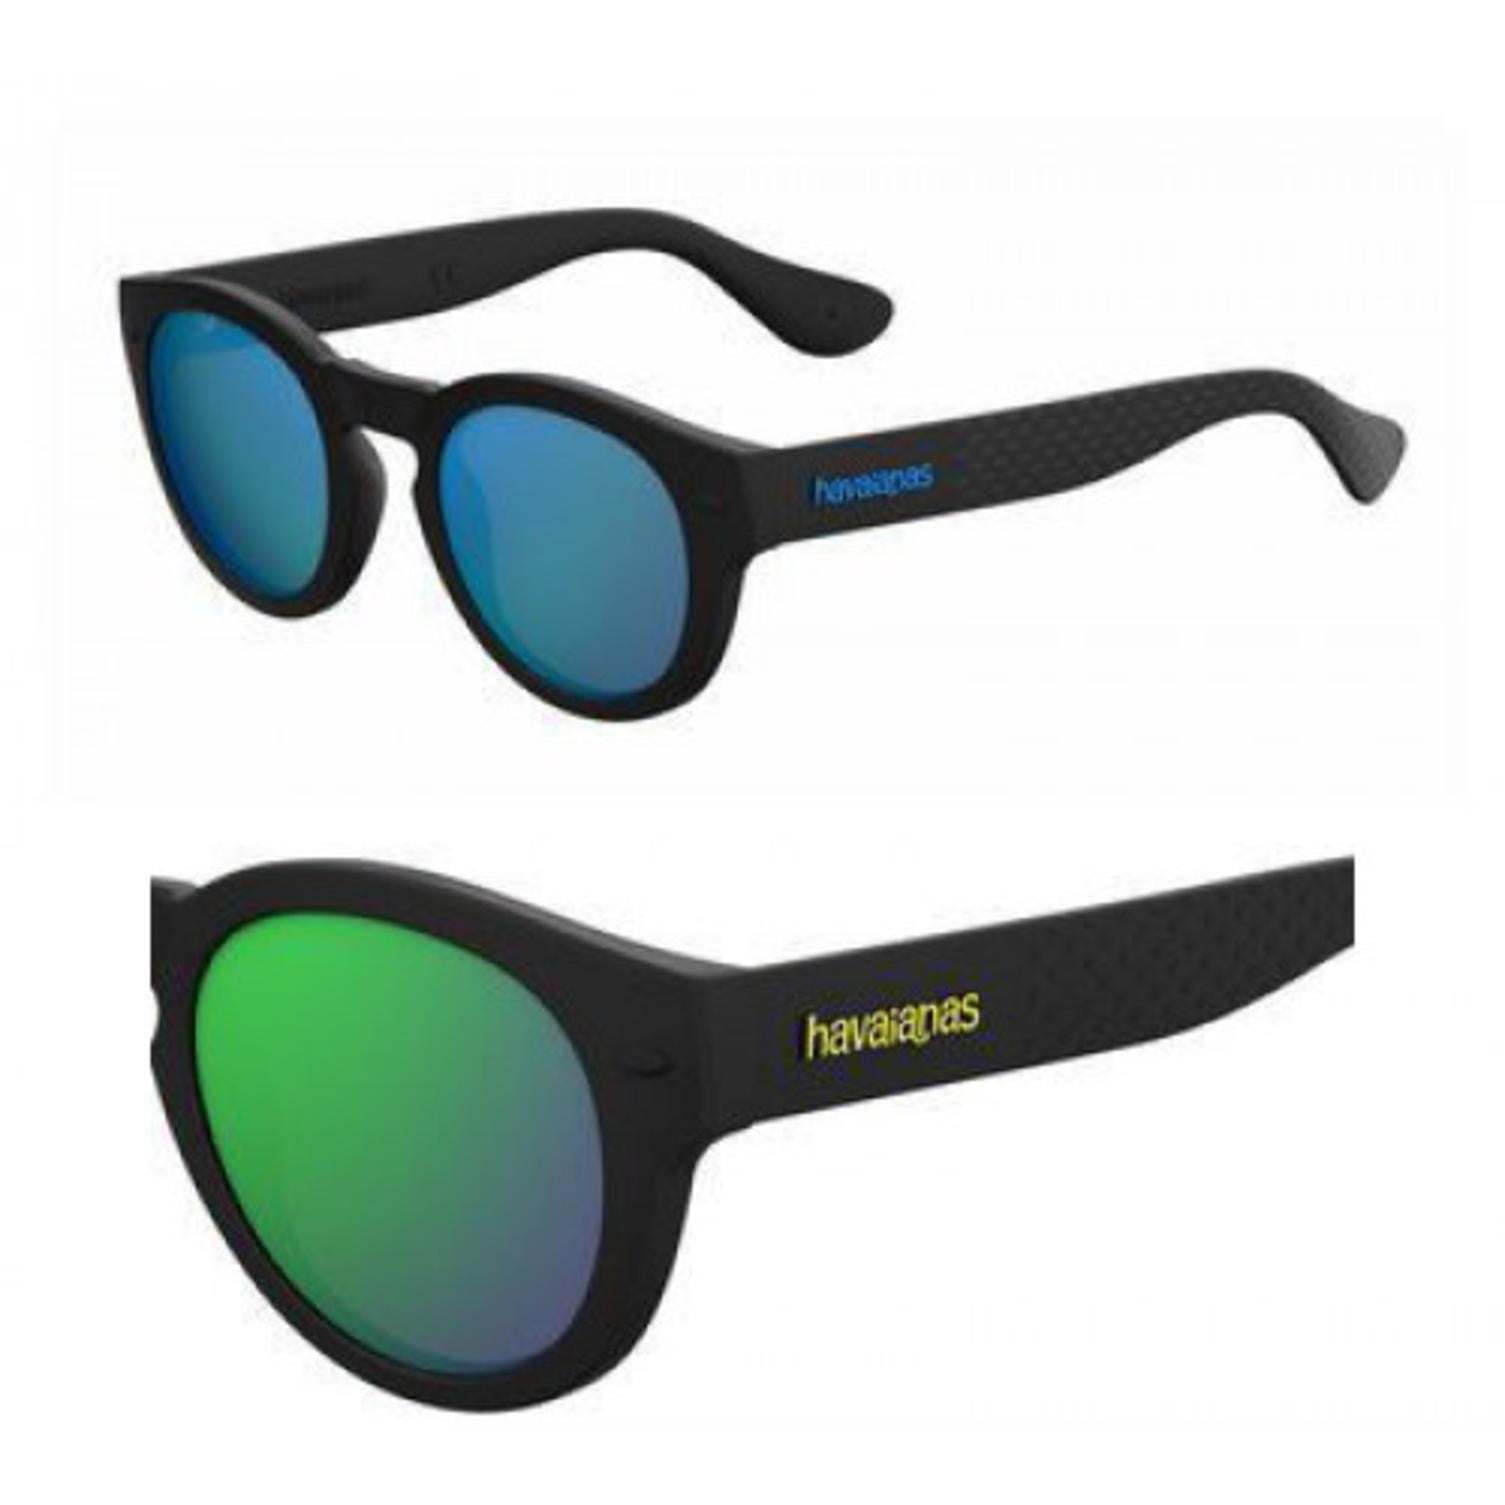 havaianas trancoso sunglasses